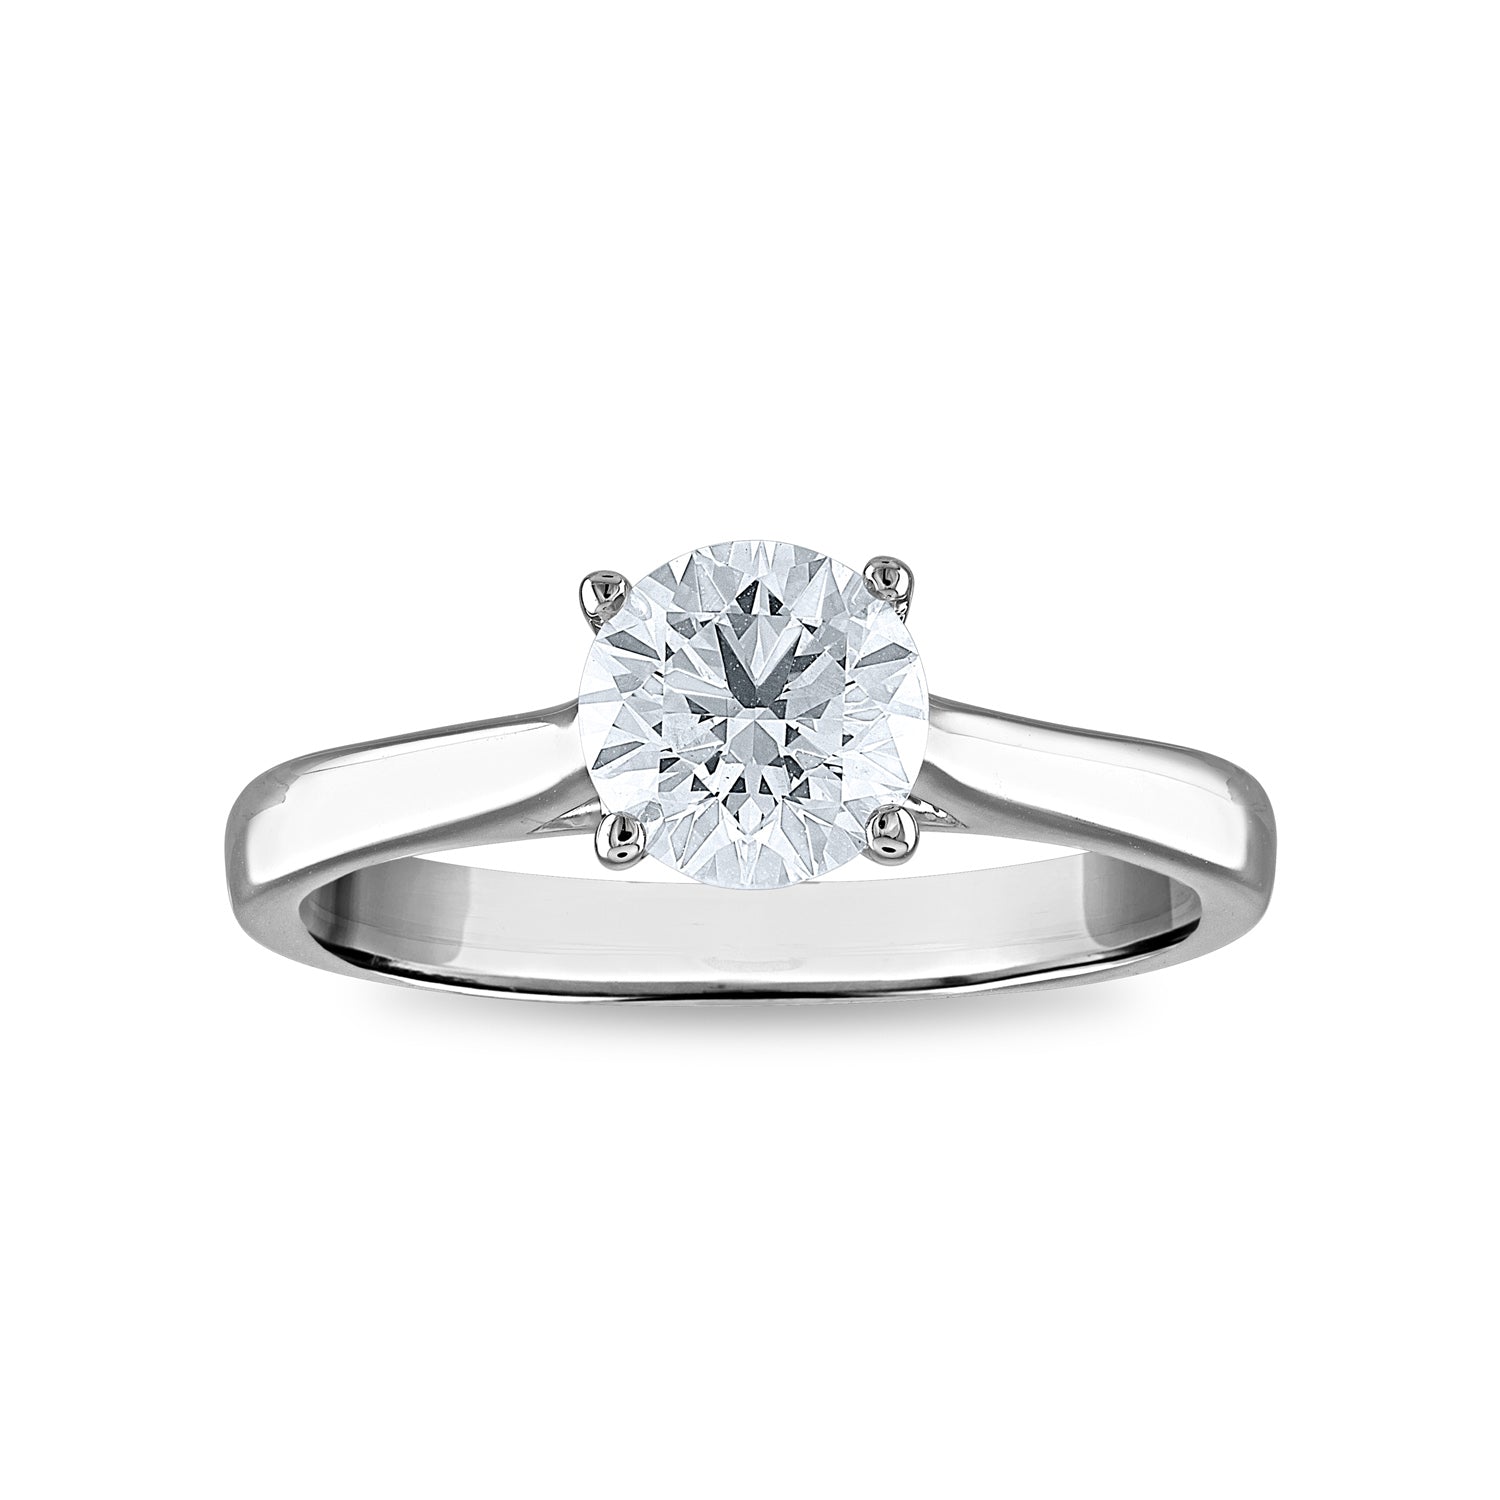 3K Diamond Ring for Sale in Bakersfield, California - OfferUp